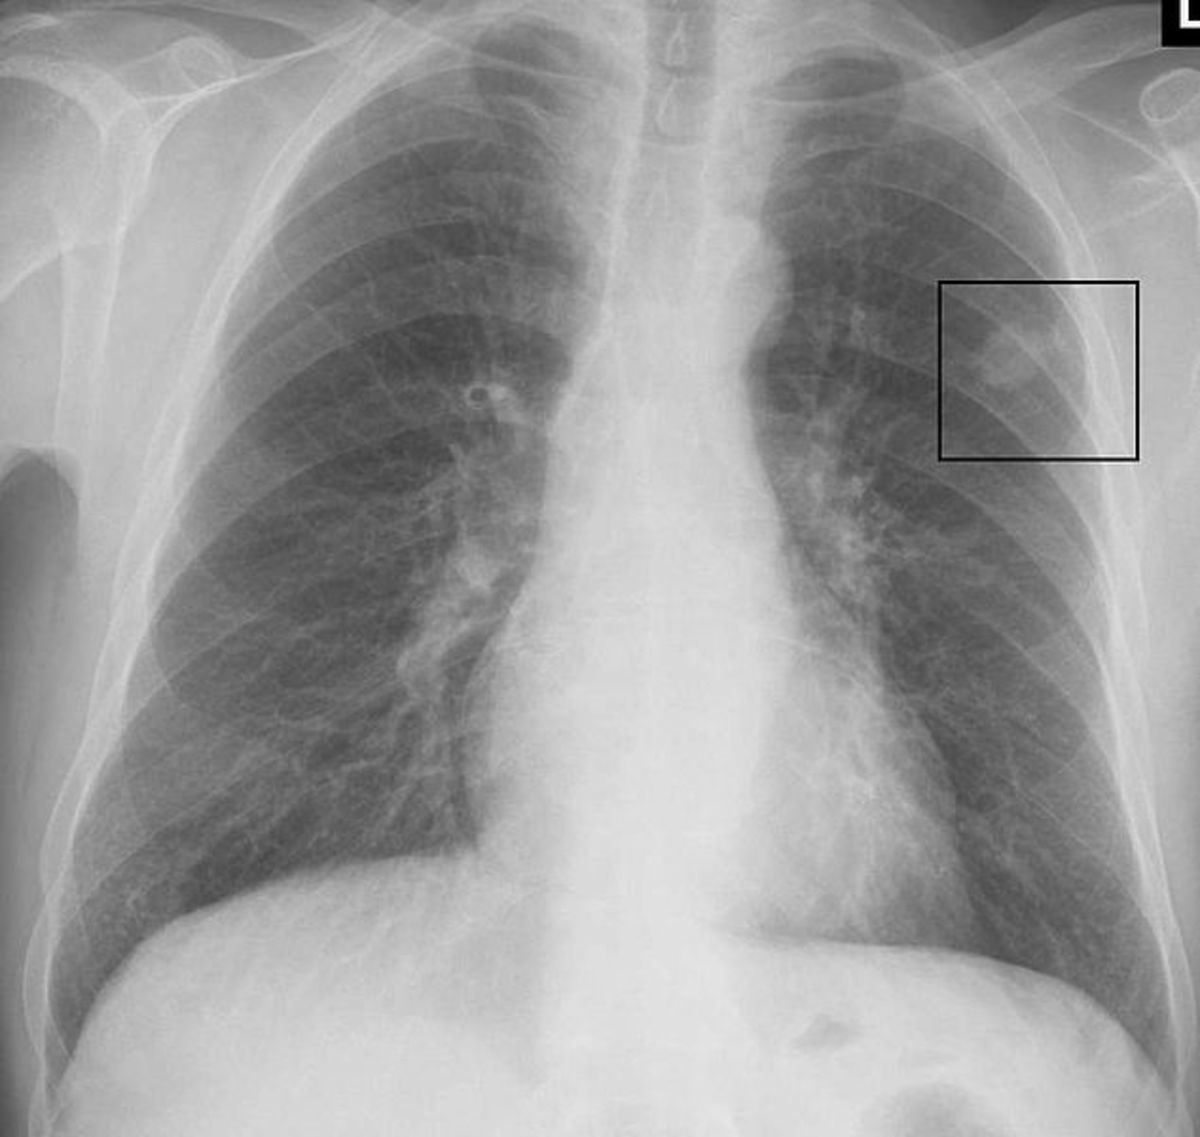 Dark Lung Spots on X-Ray